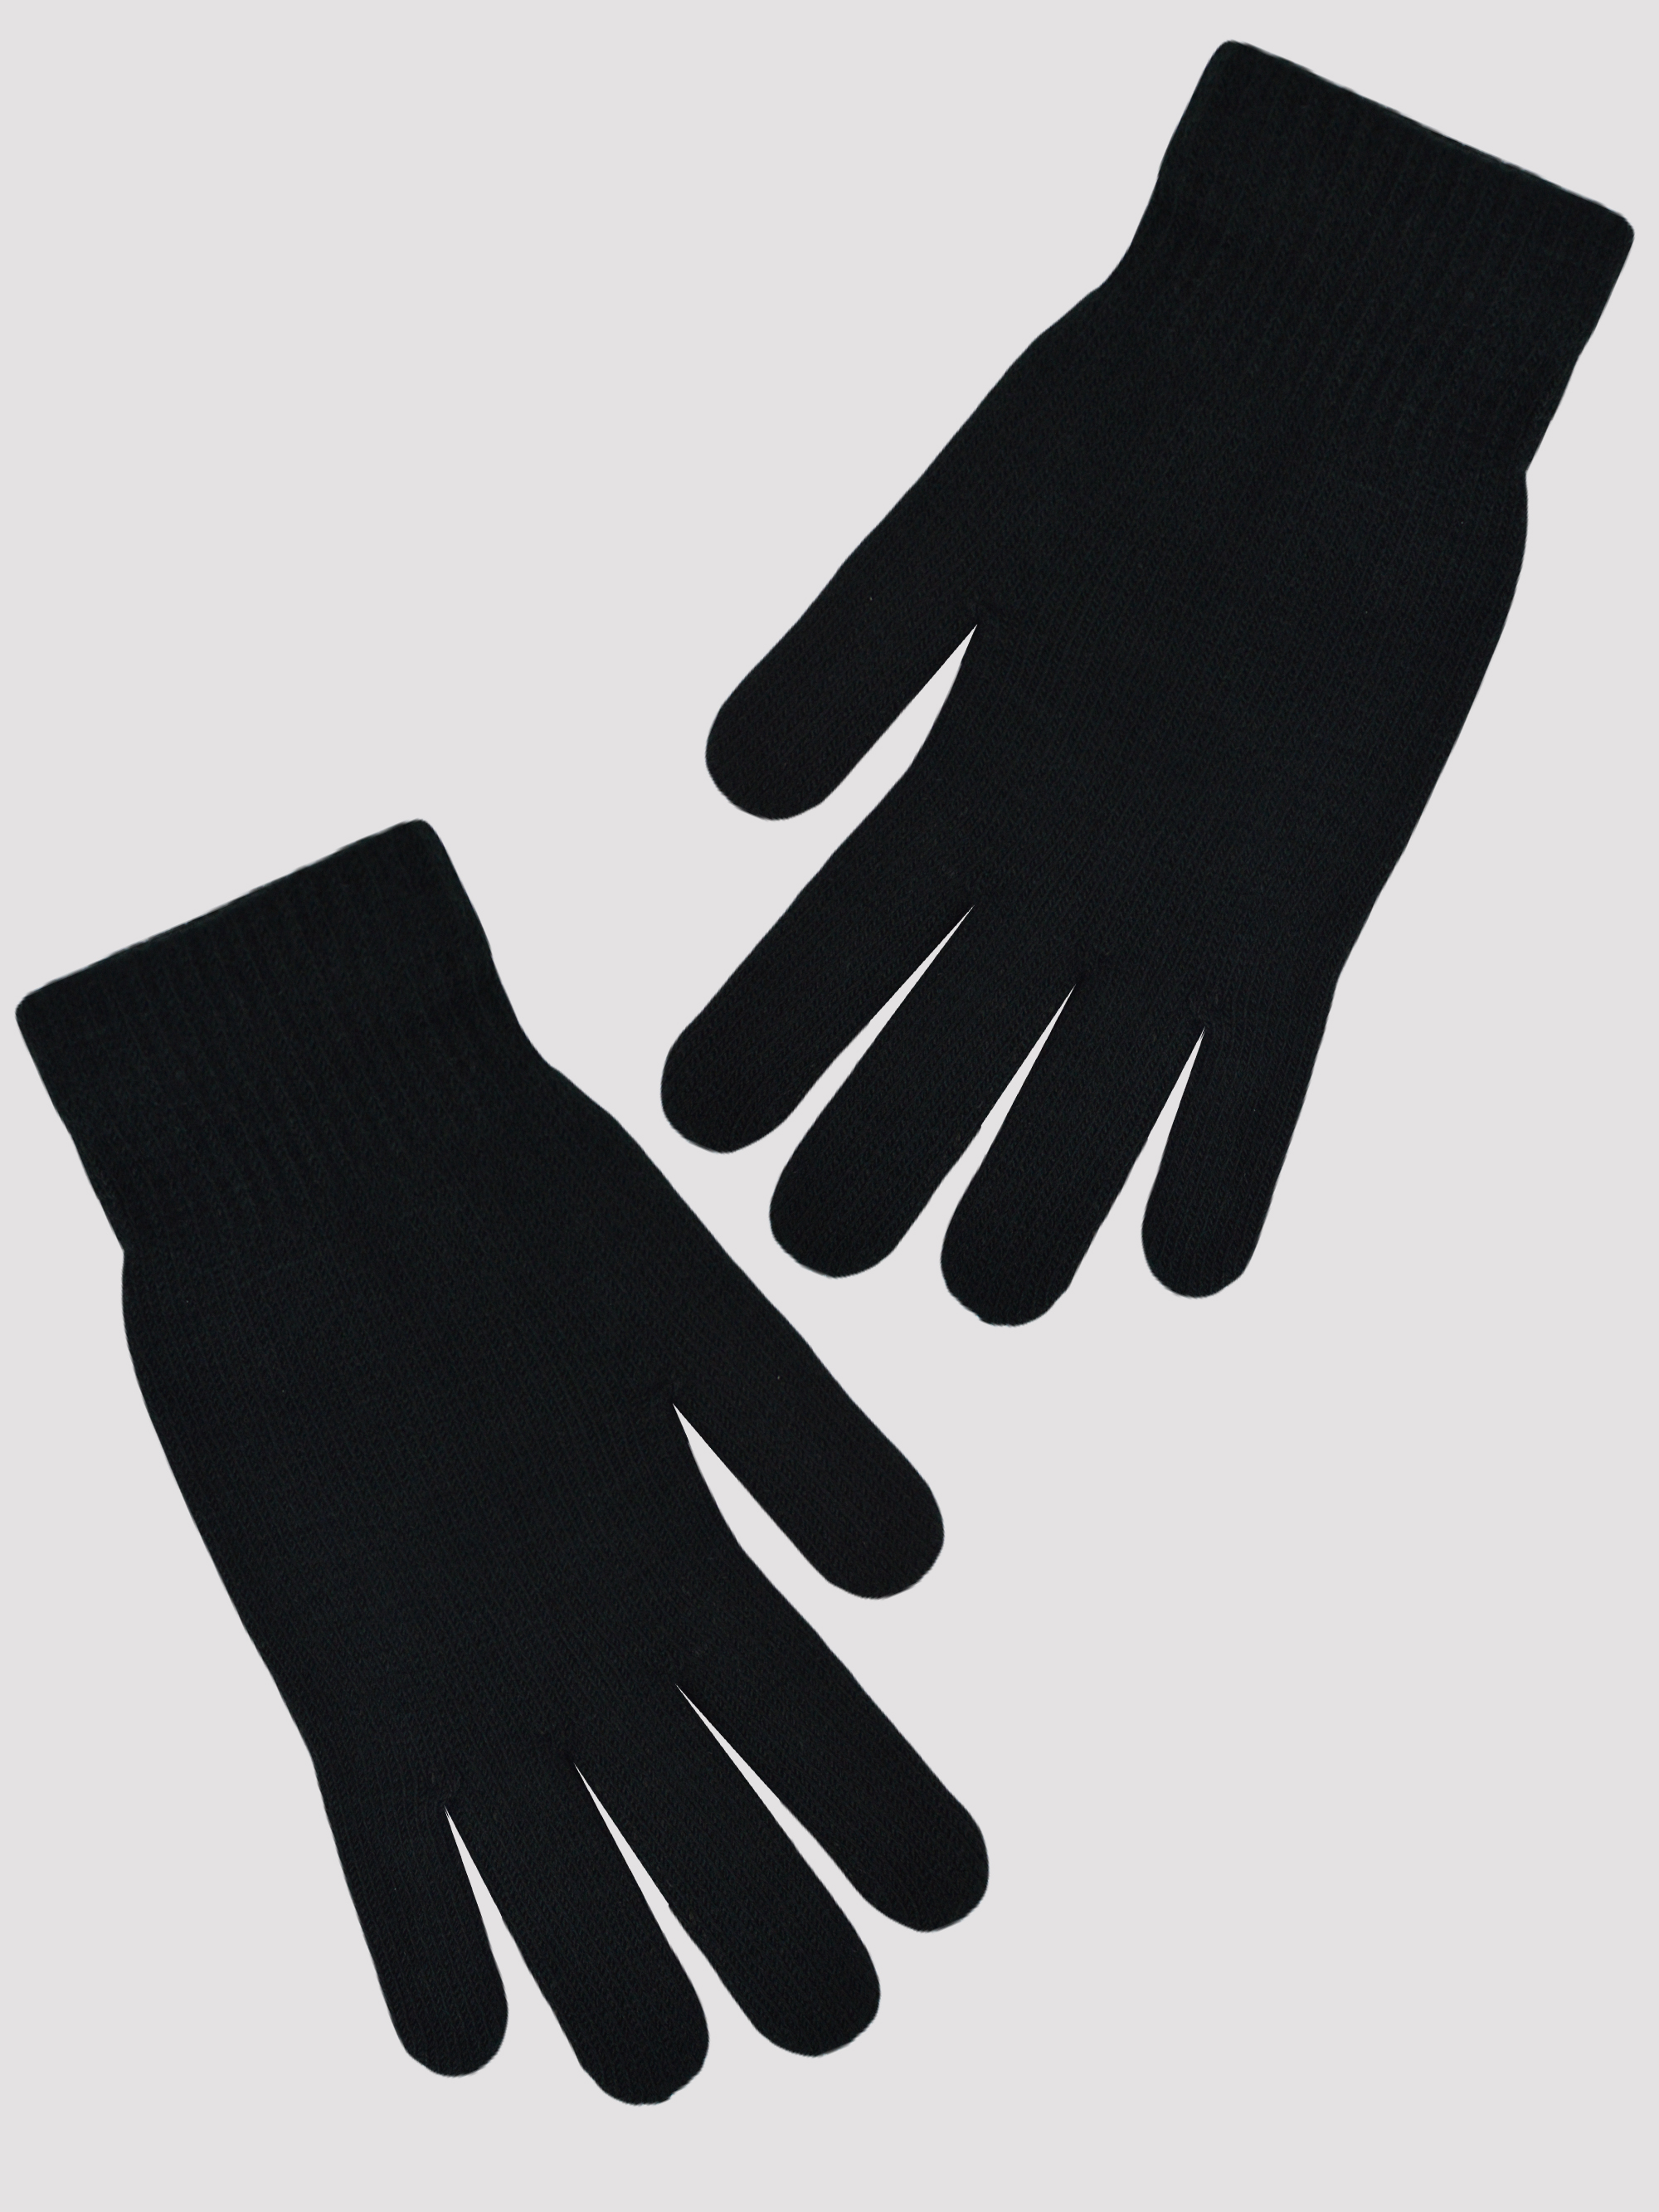 NOVITI Woman's Gloves RZ001-W-01